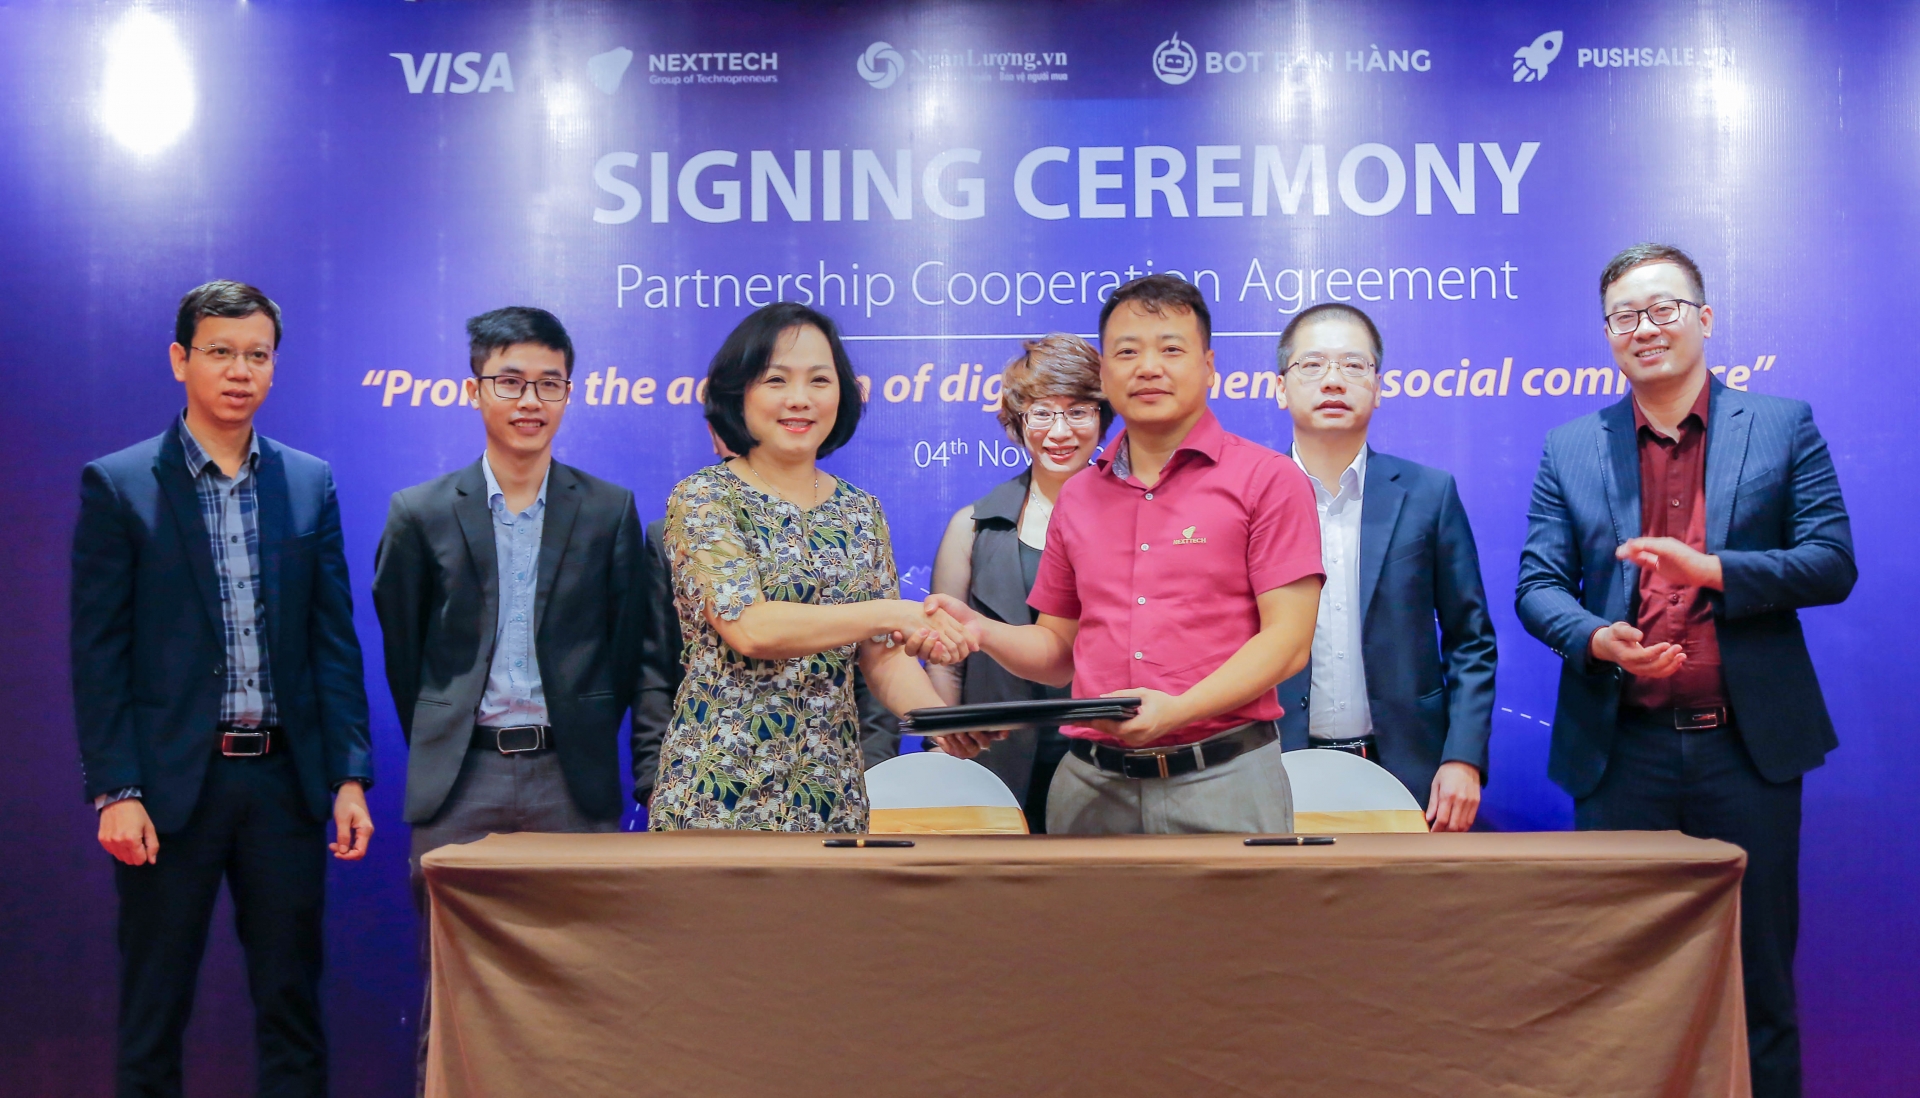 Visa and NextTech sign partnership to support social commerce merchants in Vietnam